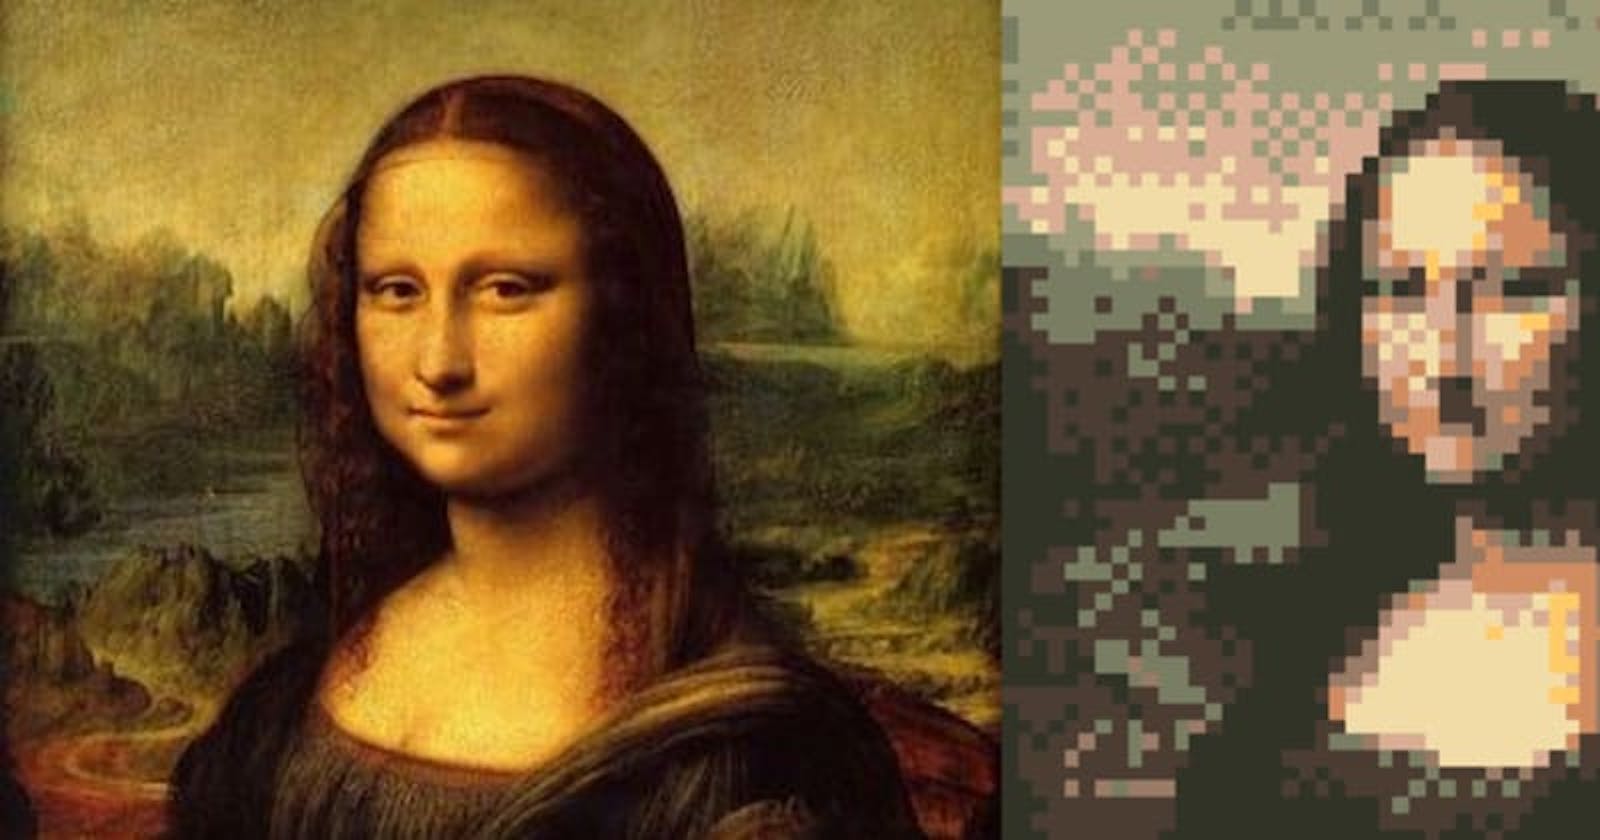 Make It Pixel! - Make pixel art from any image